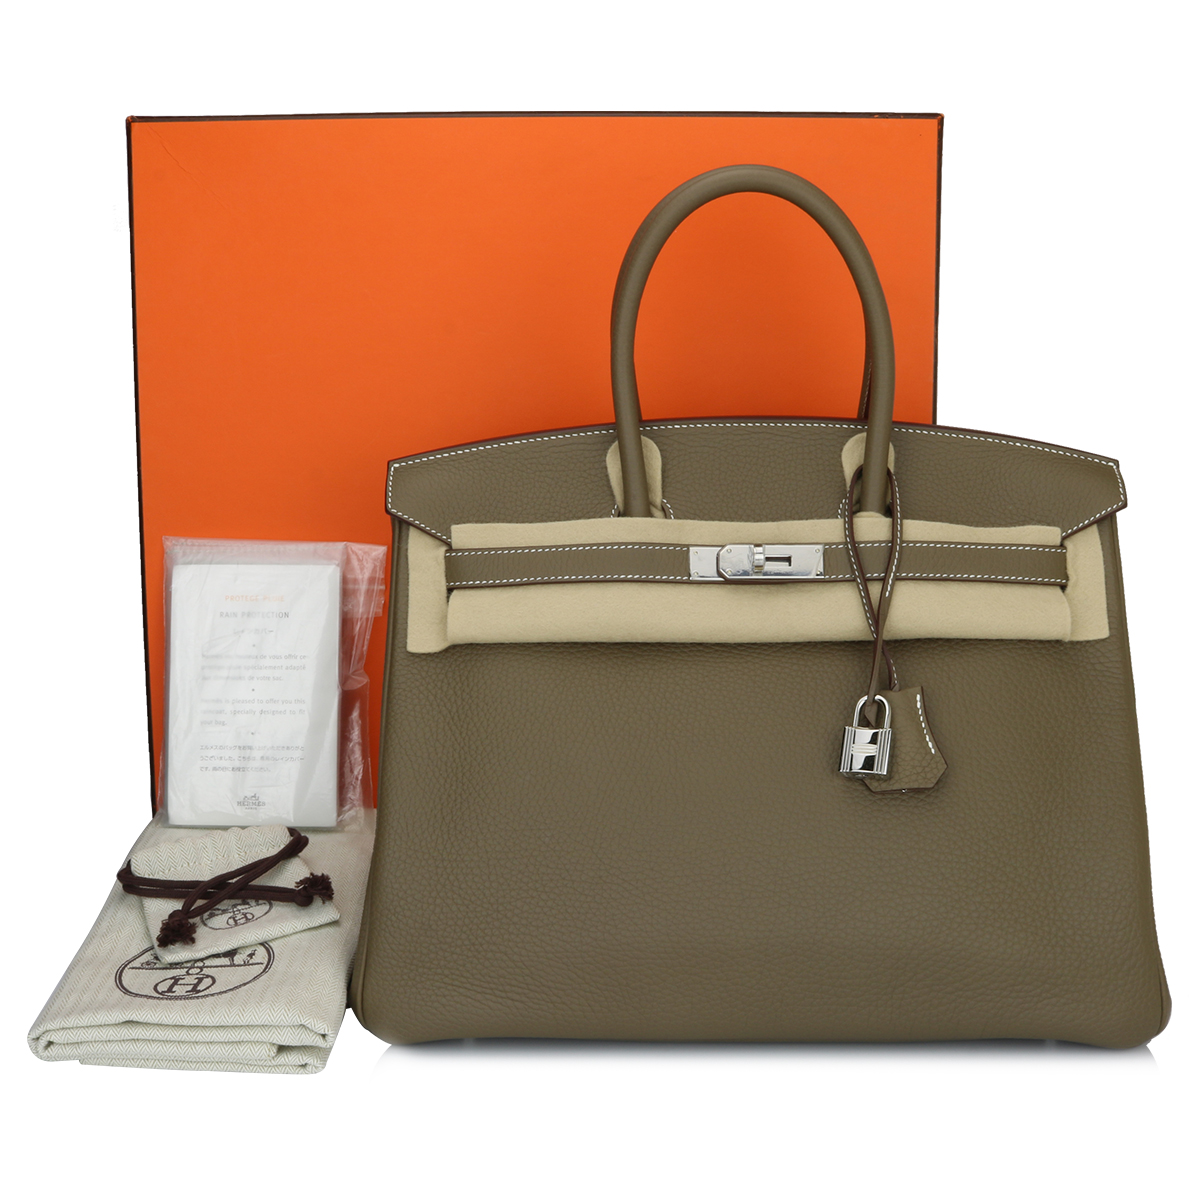 Hermès 35cm Anemone Togo leather Birkin bag sold at auction on 10th July